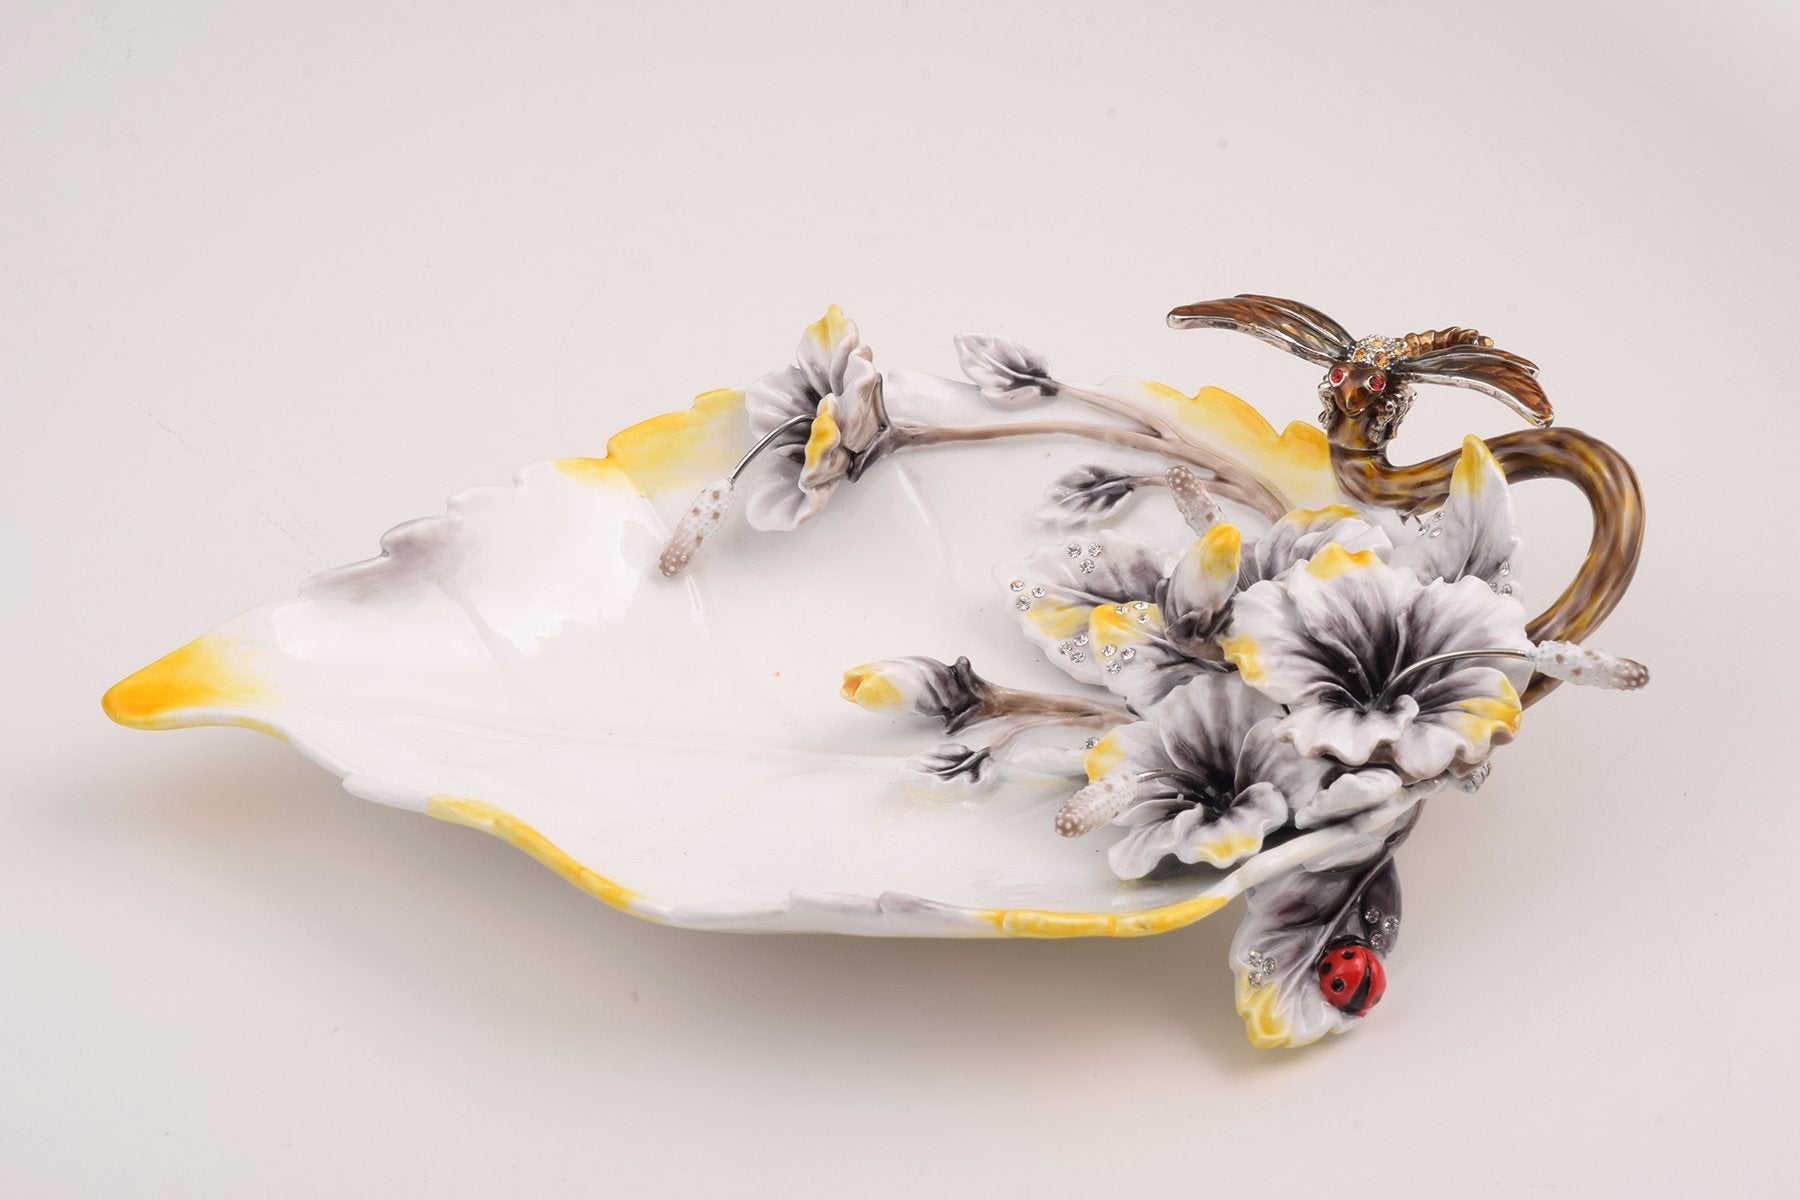 Keren Kopal White Plate with Flowers  179.00